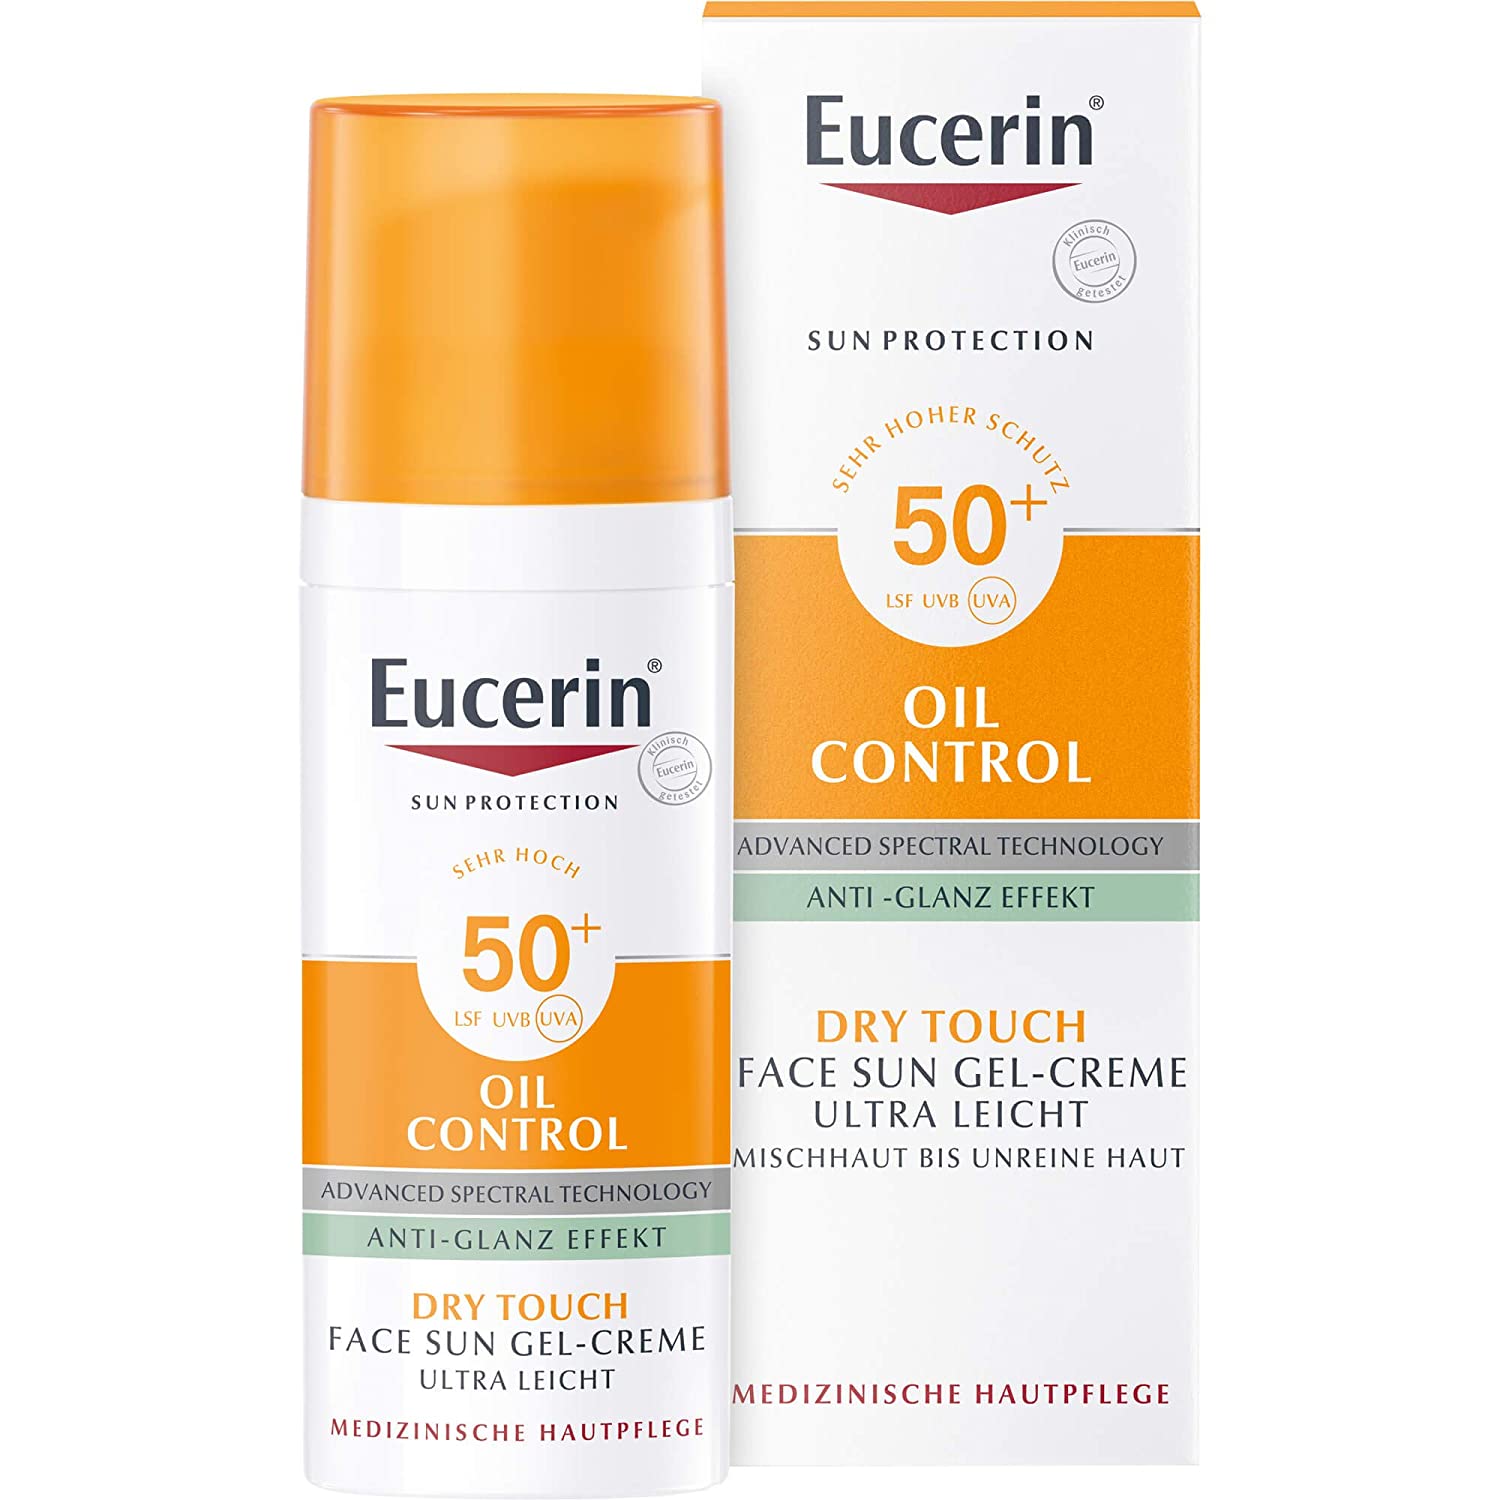 EUCERIN Oil Control Face Sun Gel-Creme SPF 50 plus Sonnenschutz Sonnencreme Sunscreen kaufen bestellen Erfahrungen ölige Haut mattierend